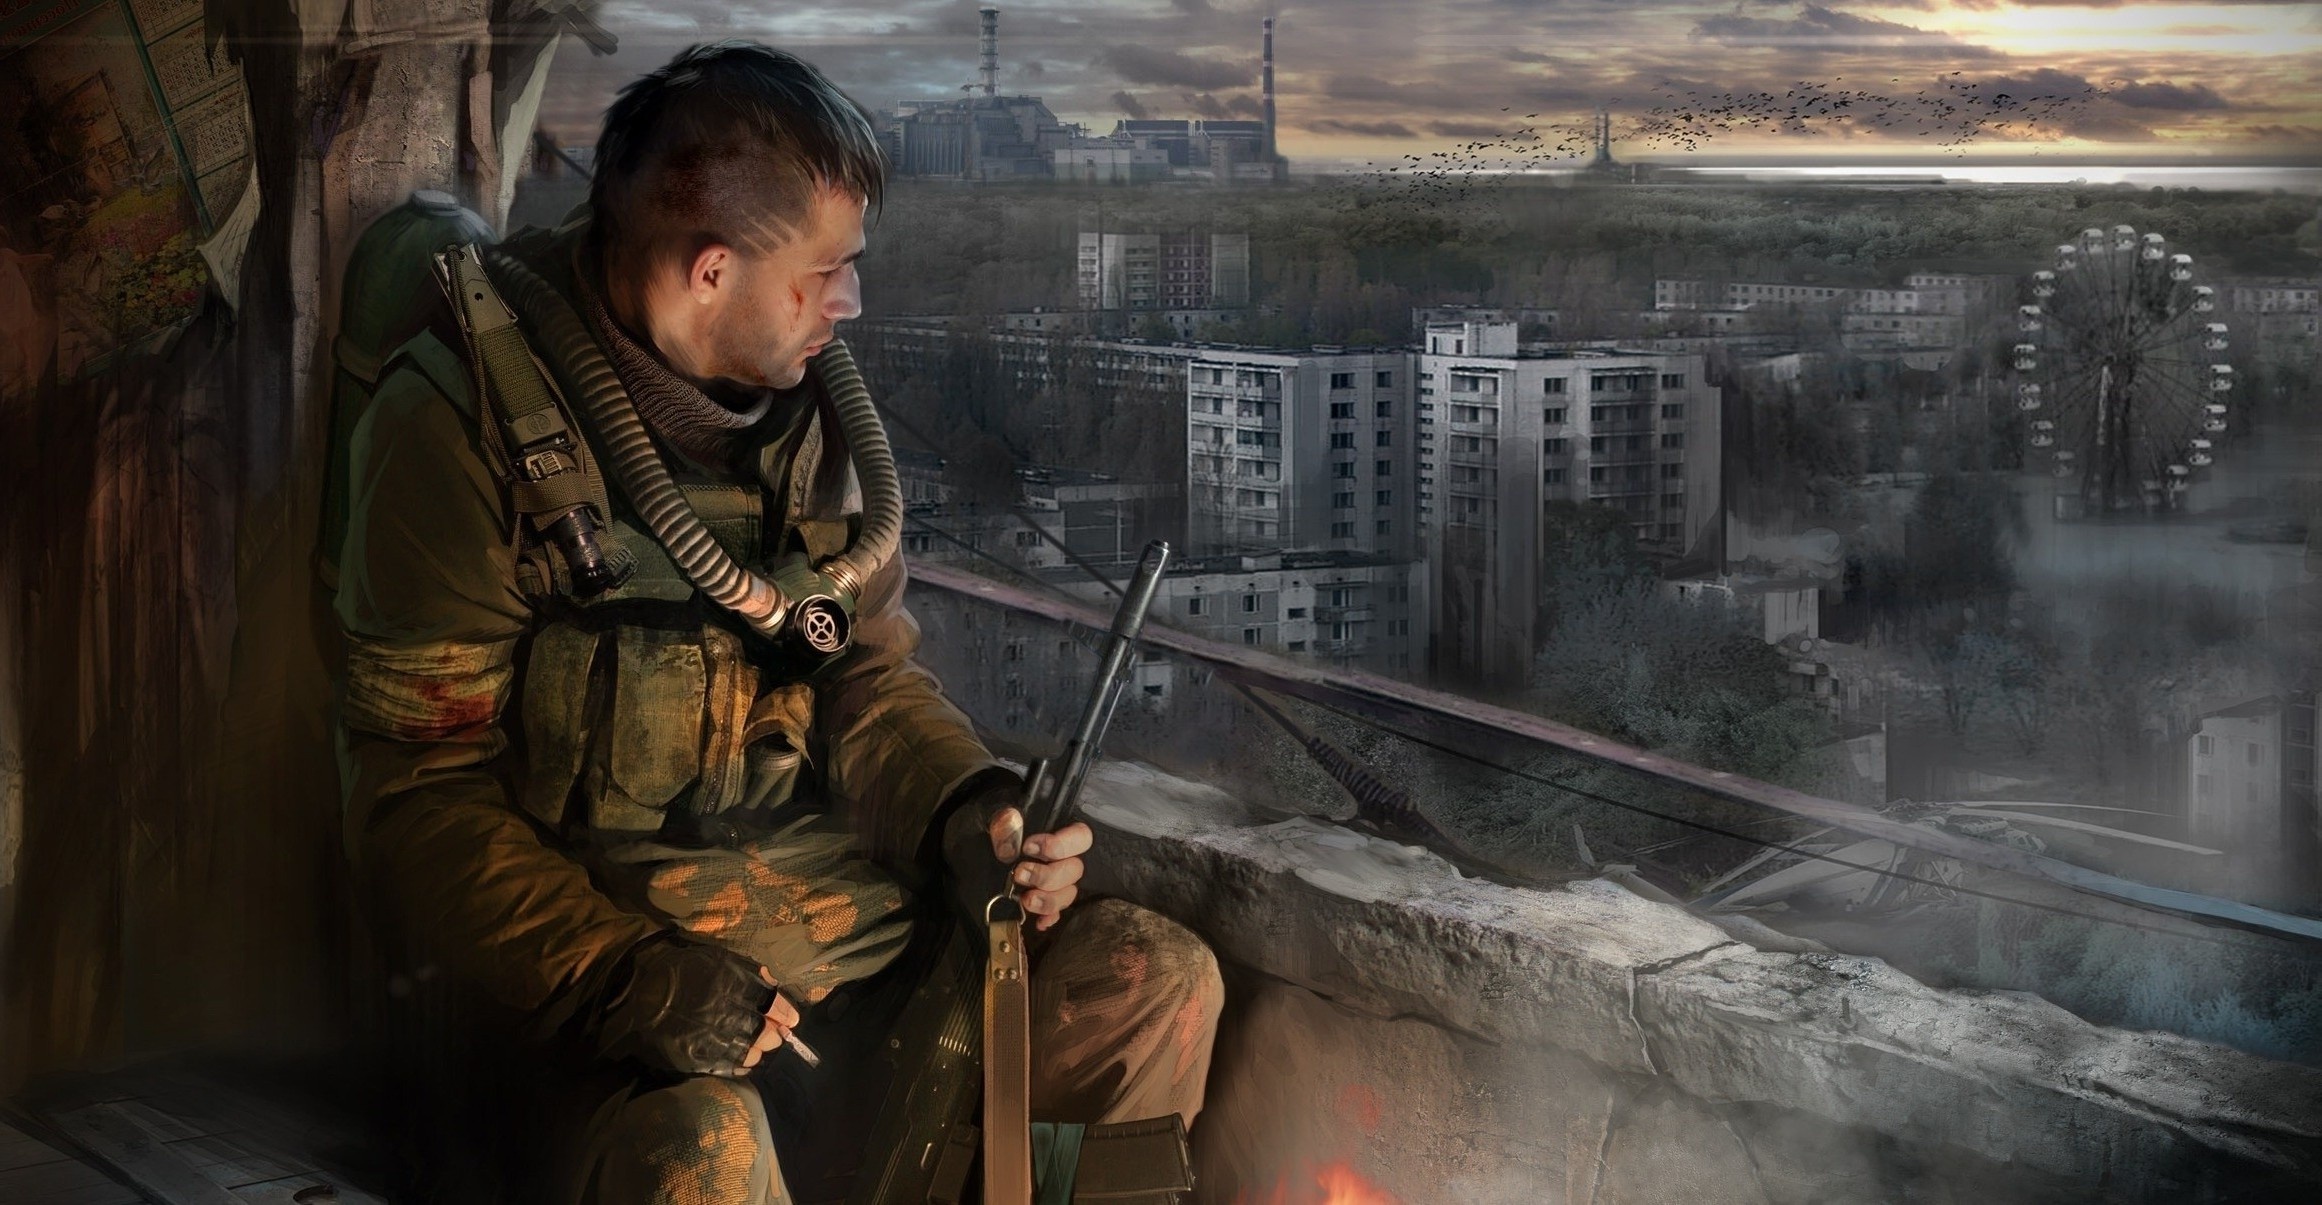 Call of Pripyat, Apocalyptic ruin, GoodFon wallpaper, Video game marvel, 2330x1210 HD Desktop